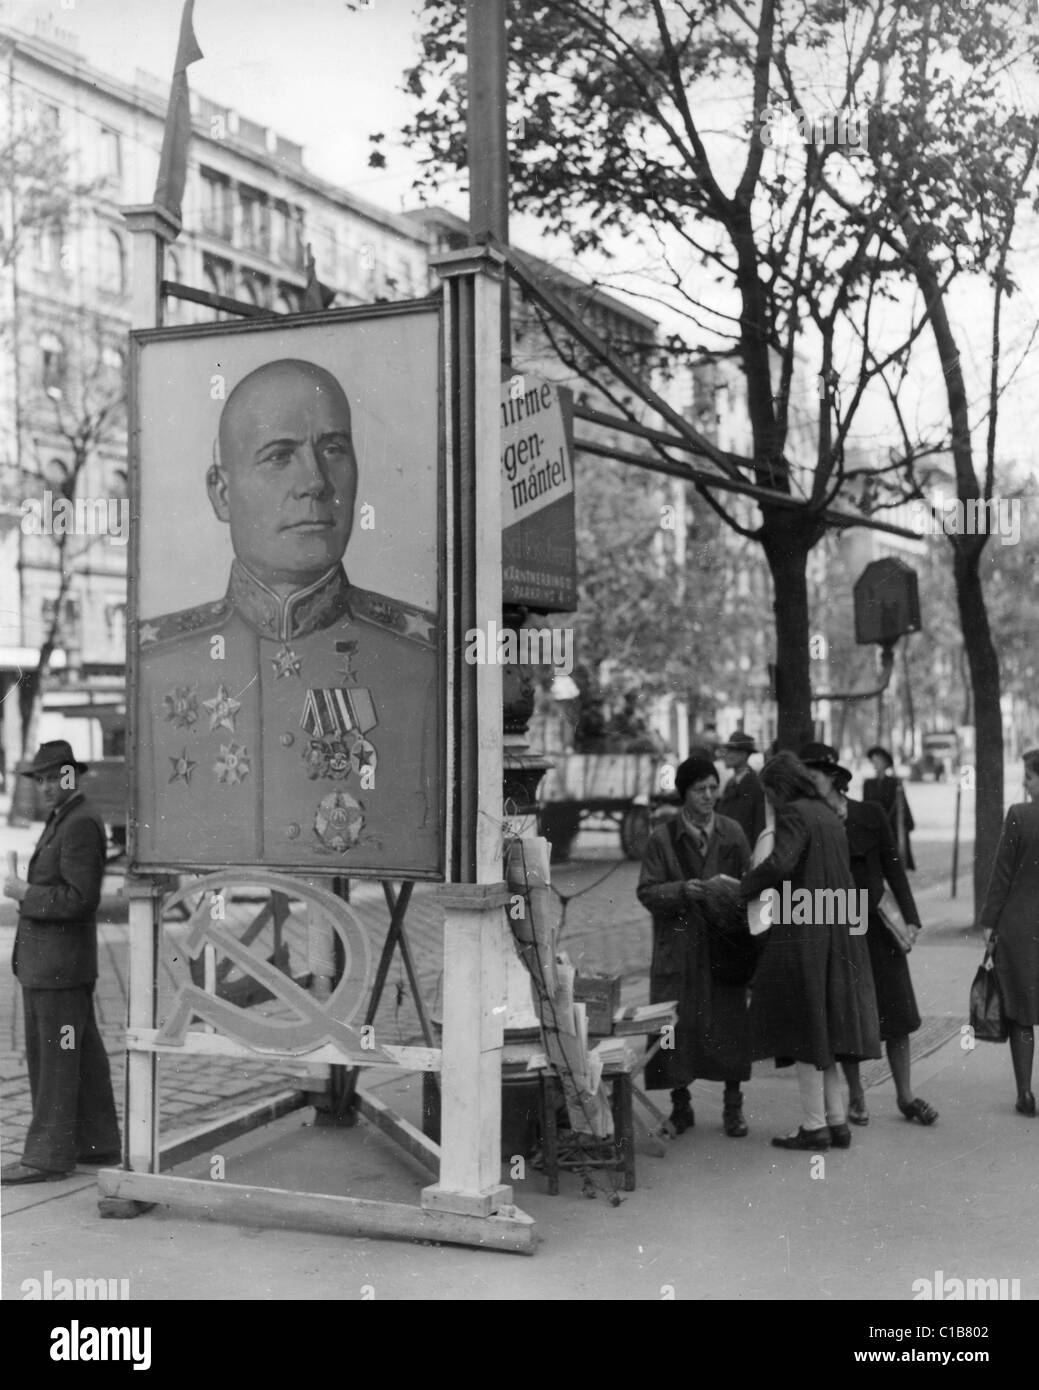 VIENNA 1945 Poster of Soviet General Koniev dominates a street near the Opera House Stock Photo